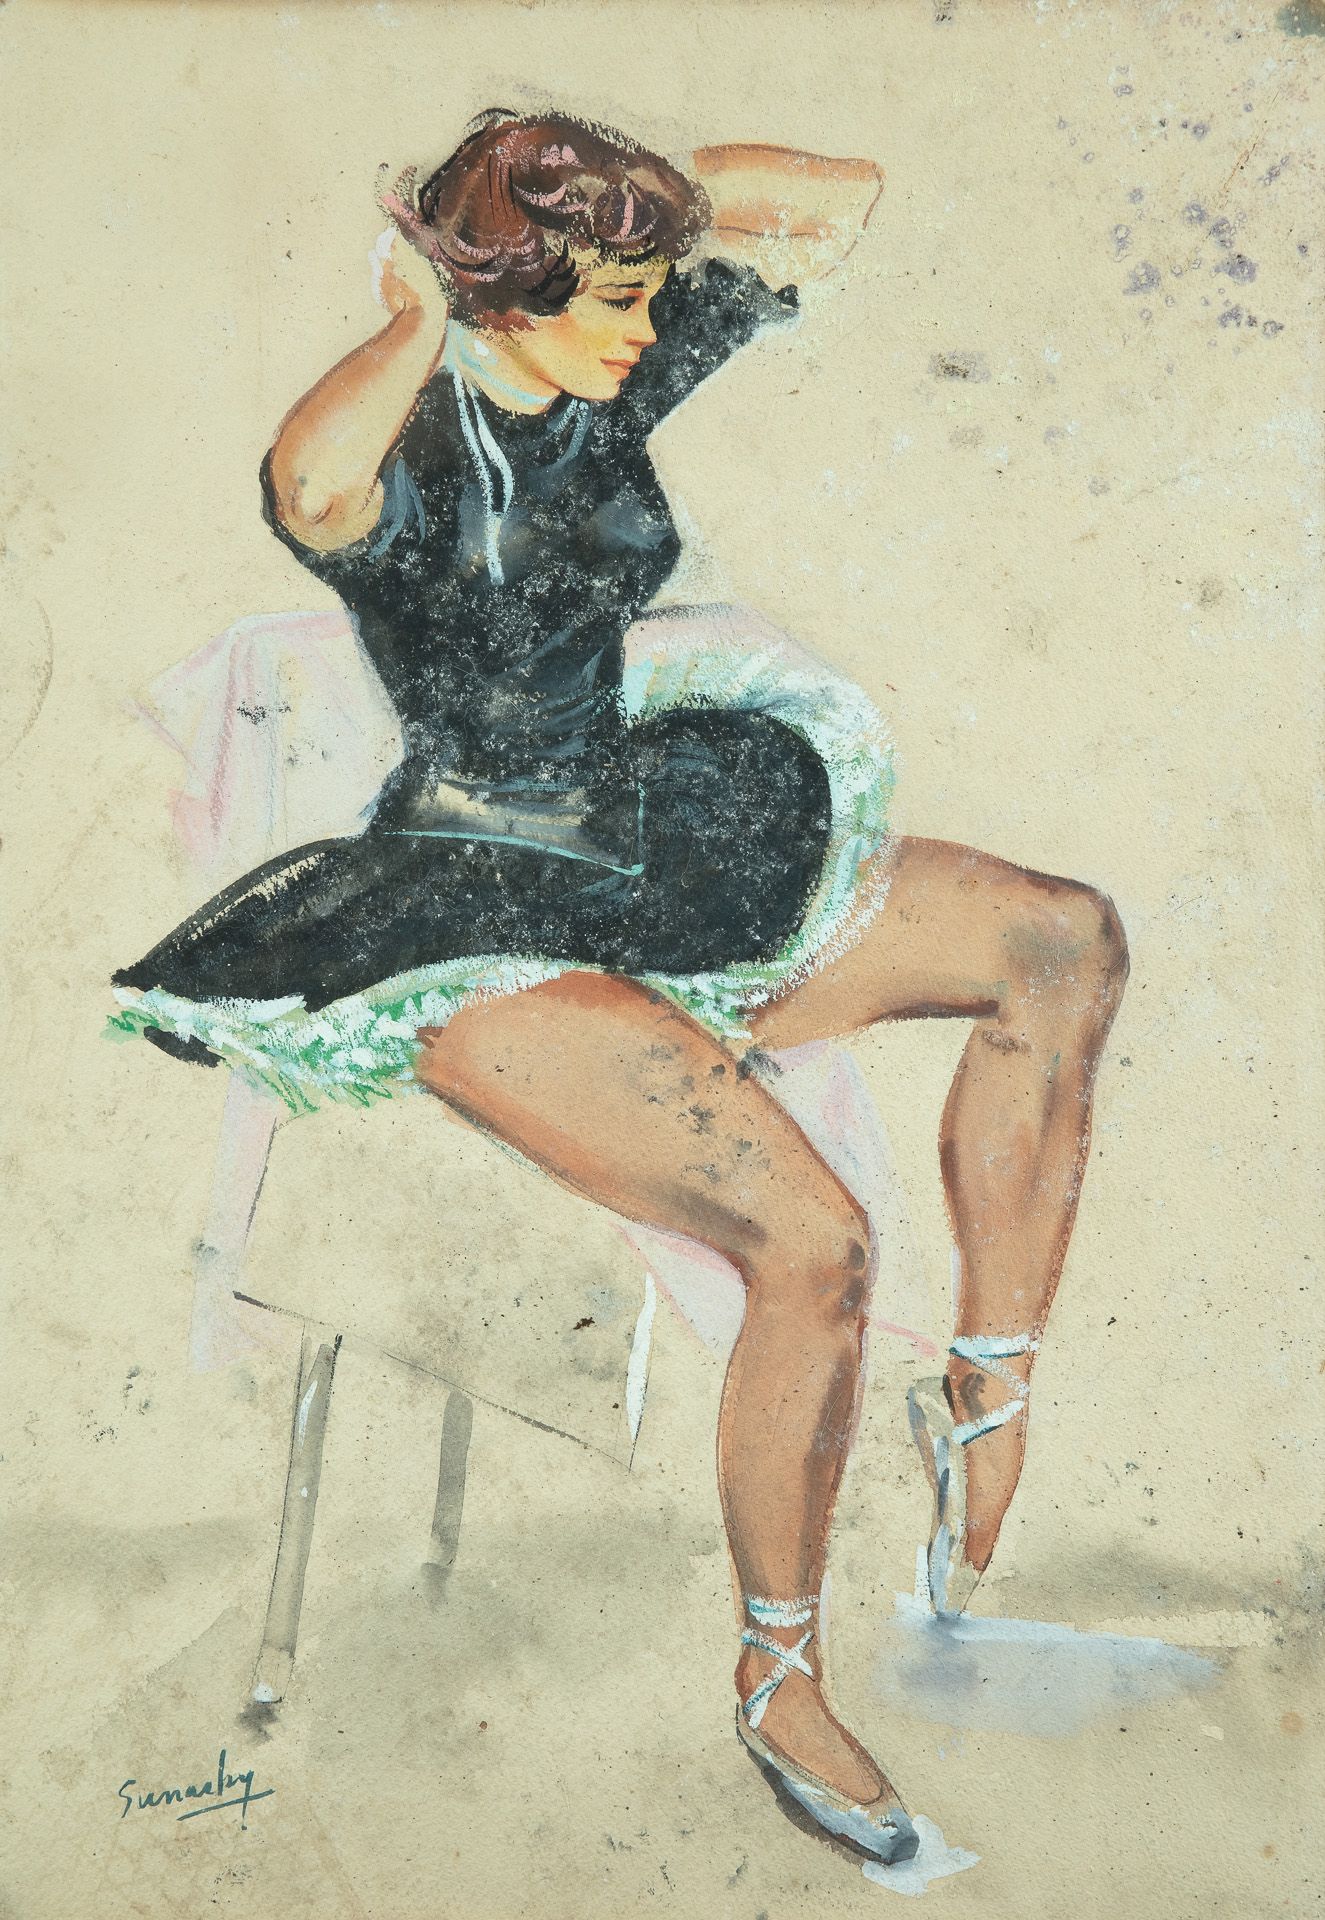 Null GUNARKY ( xx th ) 

Ballerina 

Watercolour, 61 x 42 cm, SBG. Alterations